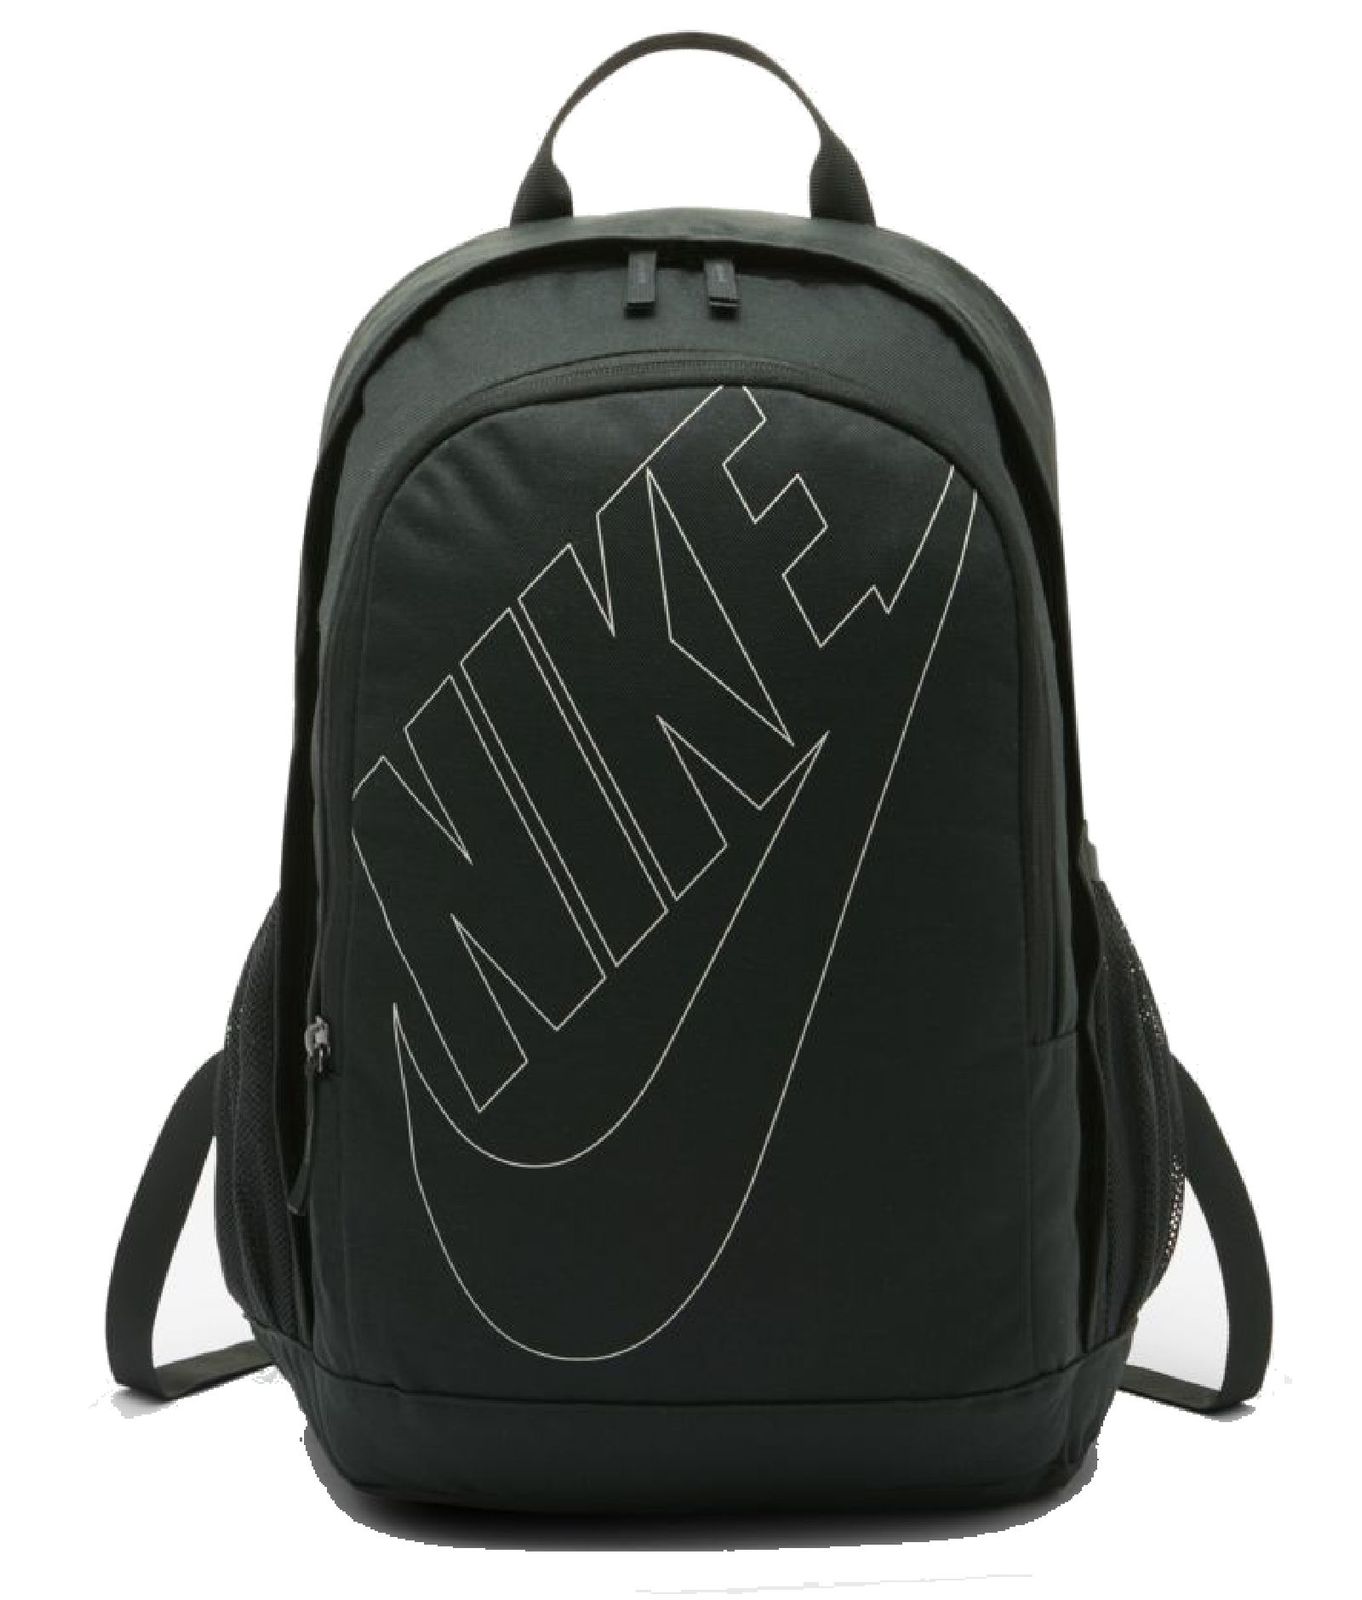 Nike Backpack Backpack Hayward Futura 2.0 Green BA5217 347 | eBay